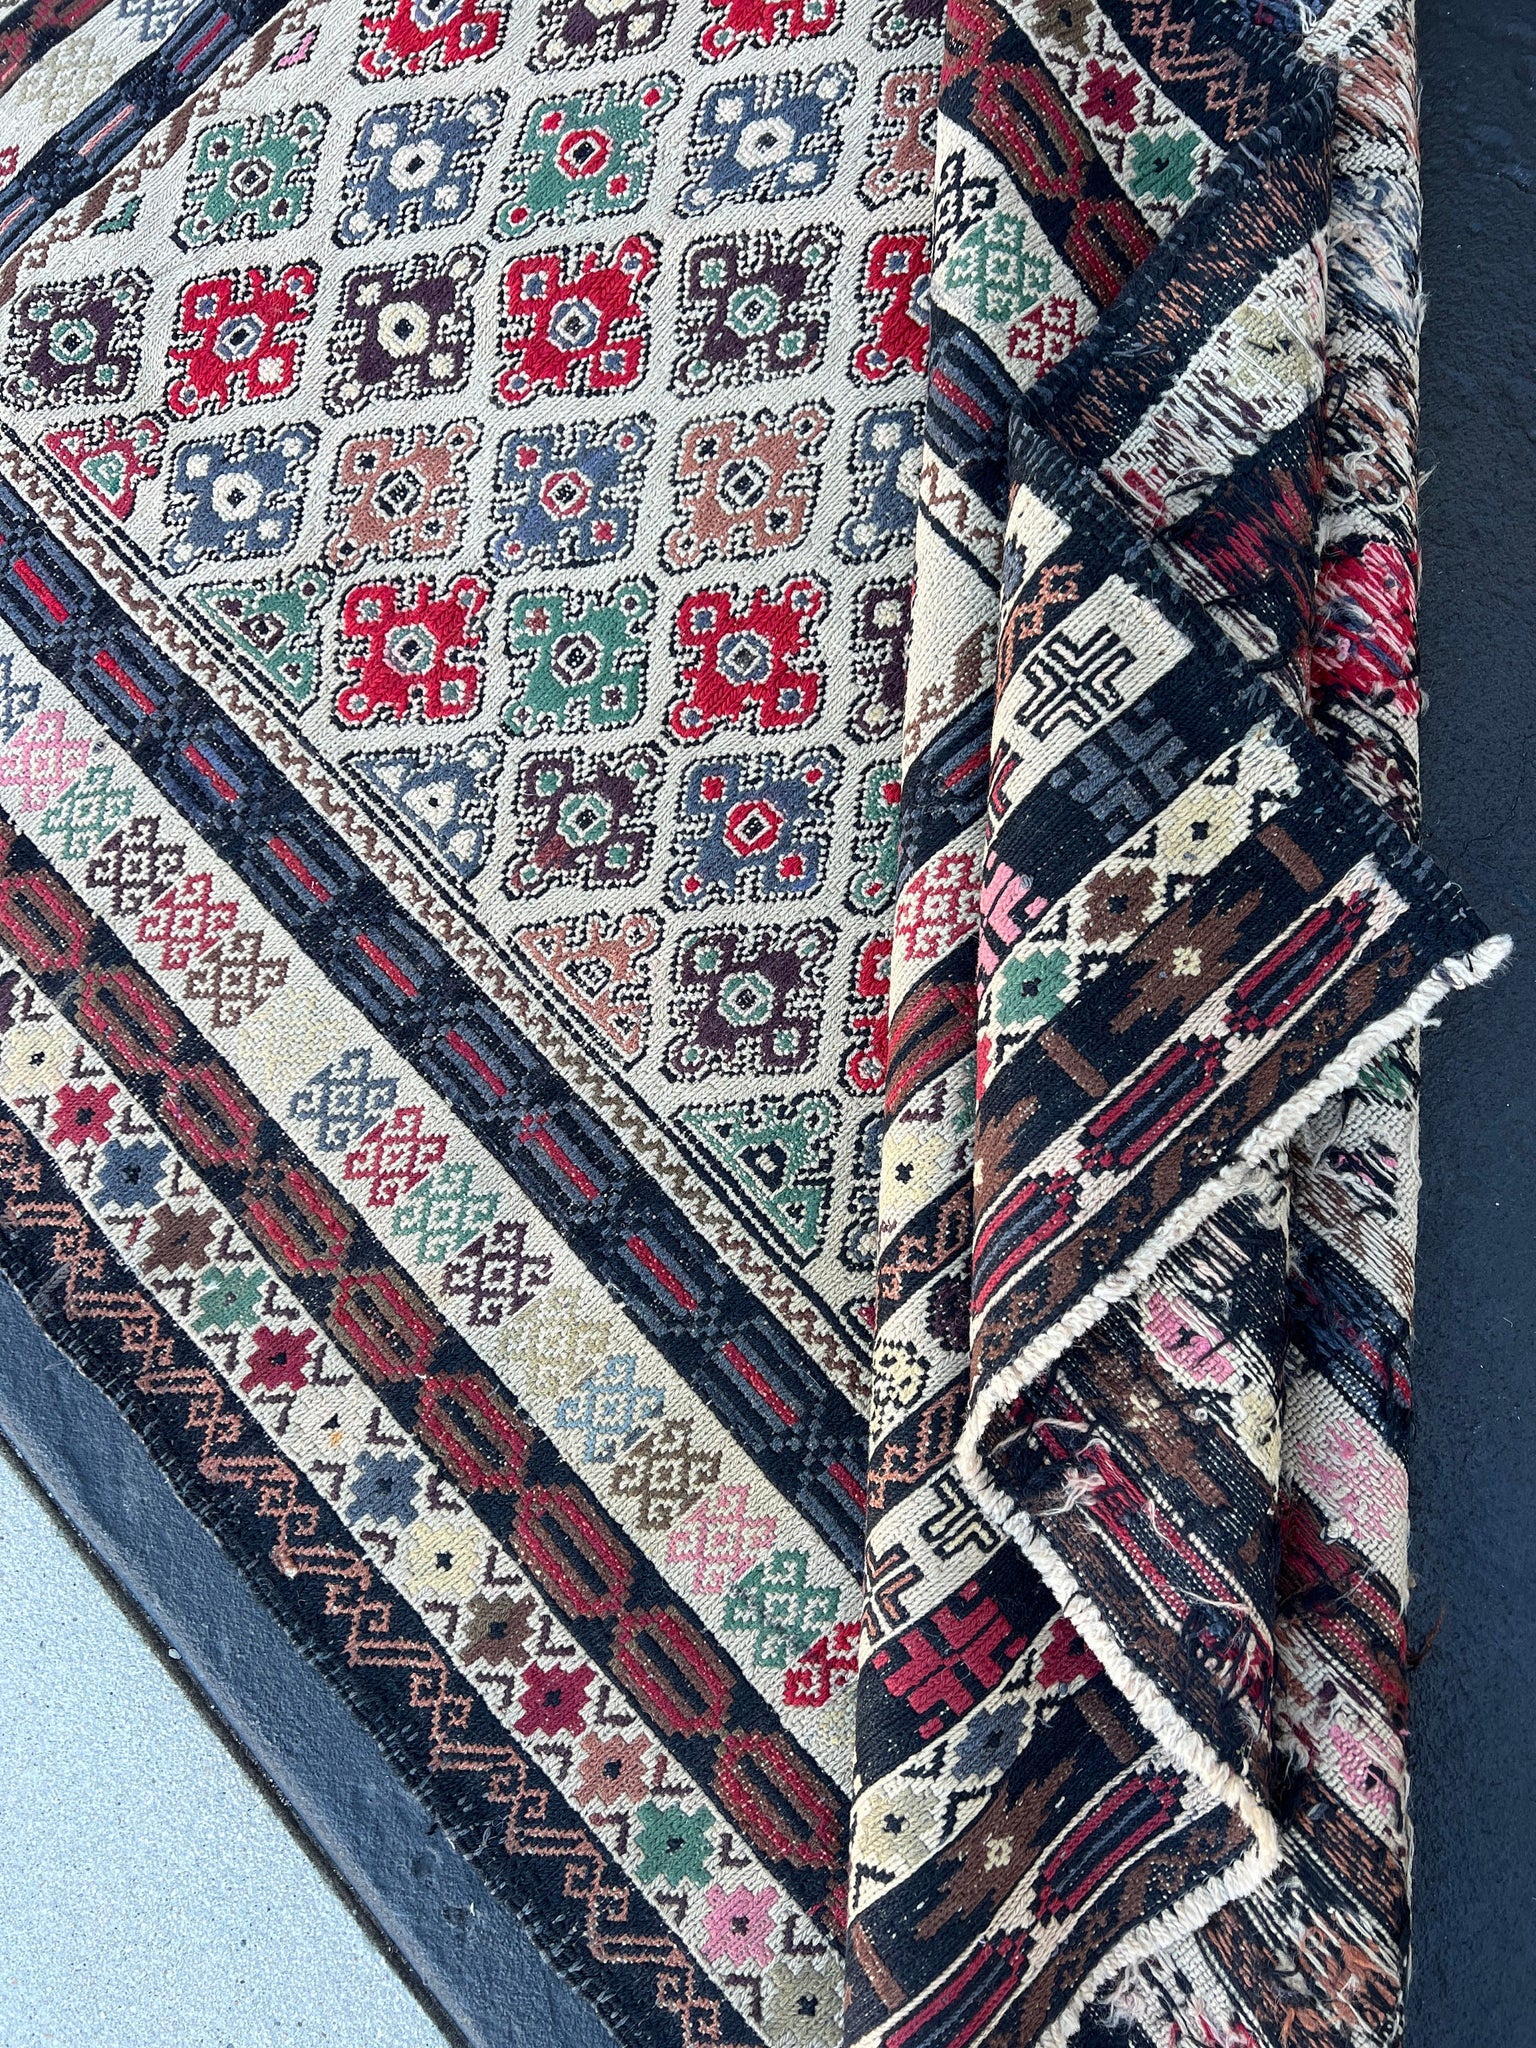 4x6 (130x190) Handmade Afghan Rug | Cream Beige Black Brick Crimson Red Chocolate Taupe Grey Teal Blush Pink Denim Blue | Geometric Wool